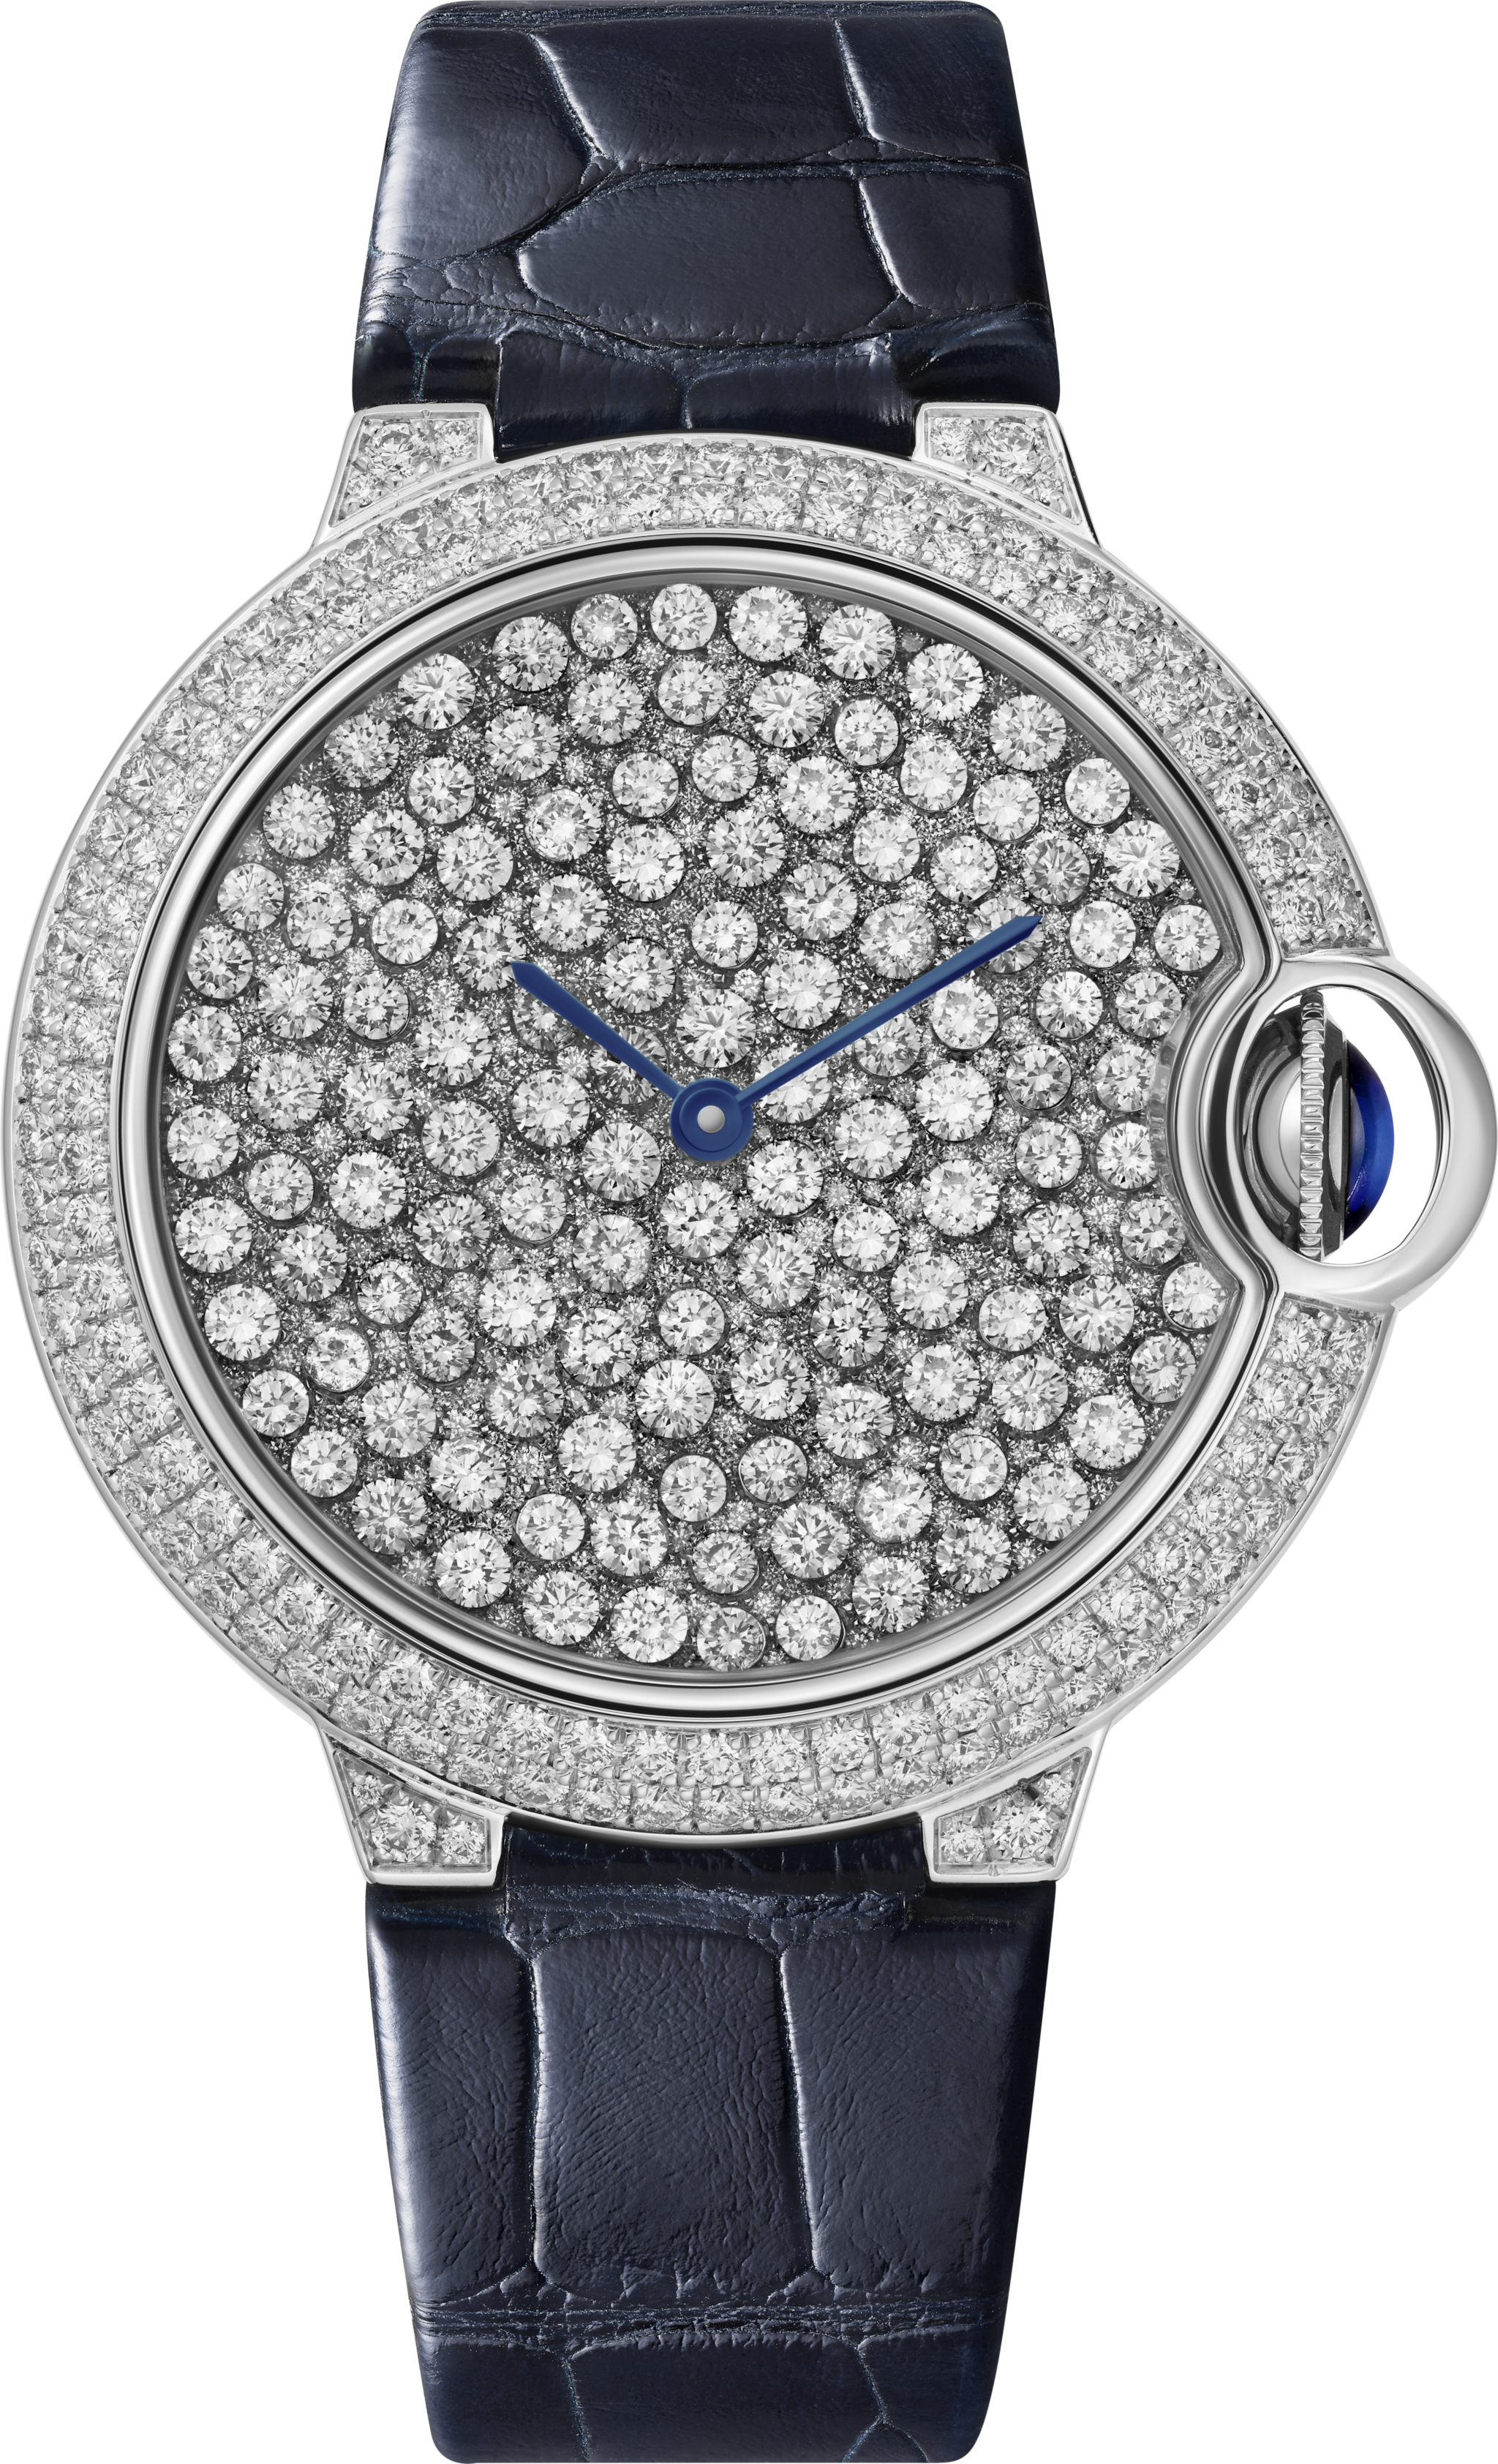 Ballon Bleu de Cartier watch37 mm, automatic mechanical movement, white gold, diamonds, alligator-skin strap